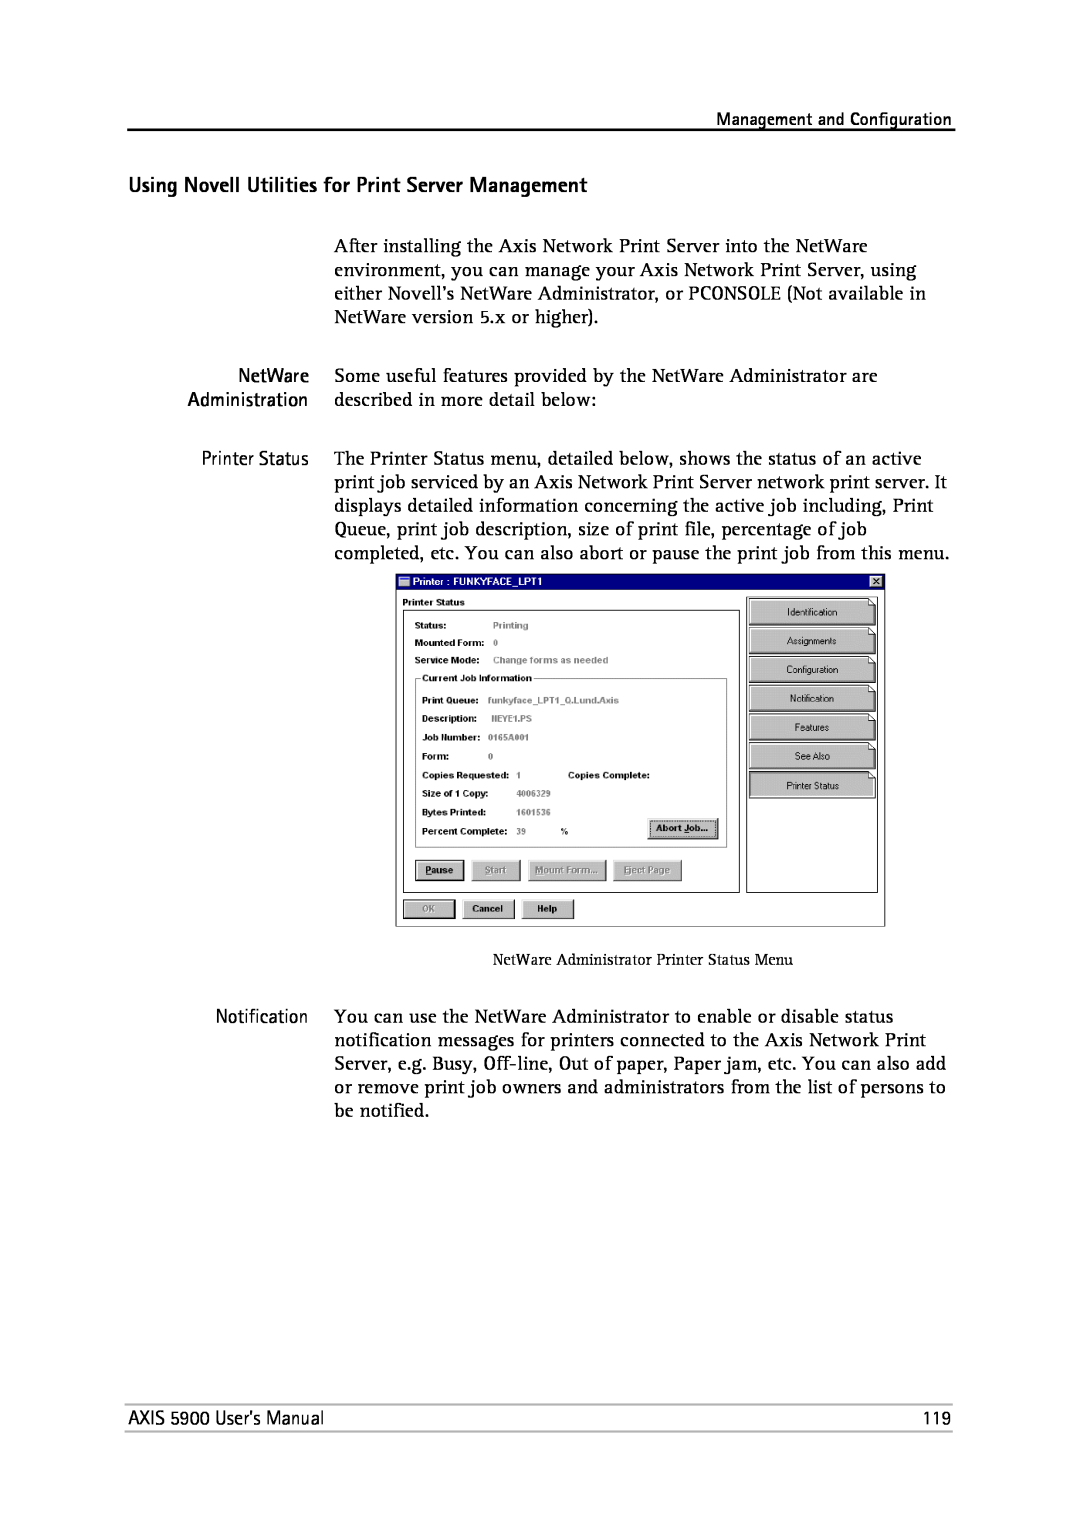 Philips 5900 user manual Using Novell Utilities for Print Server Management, NetWare Administrator Printer Status Menu 